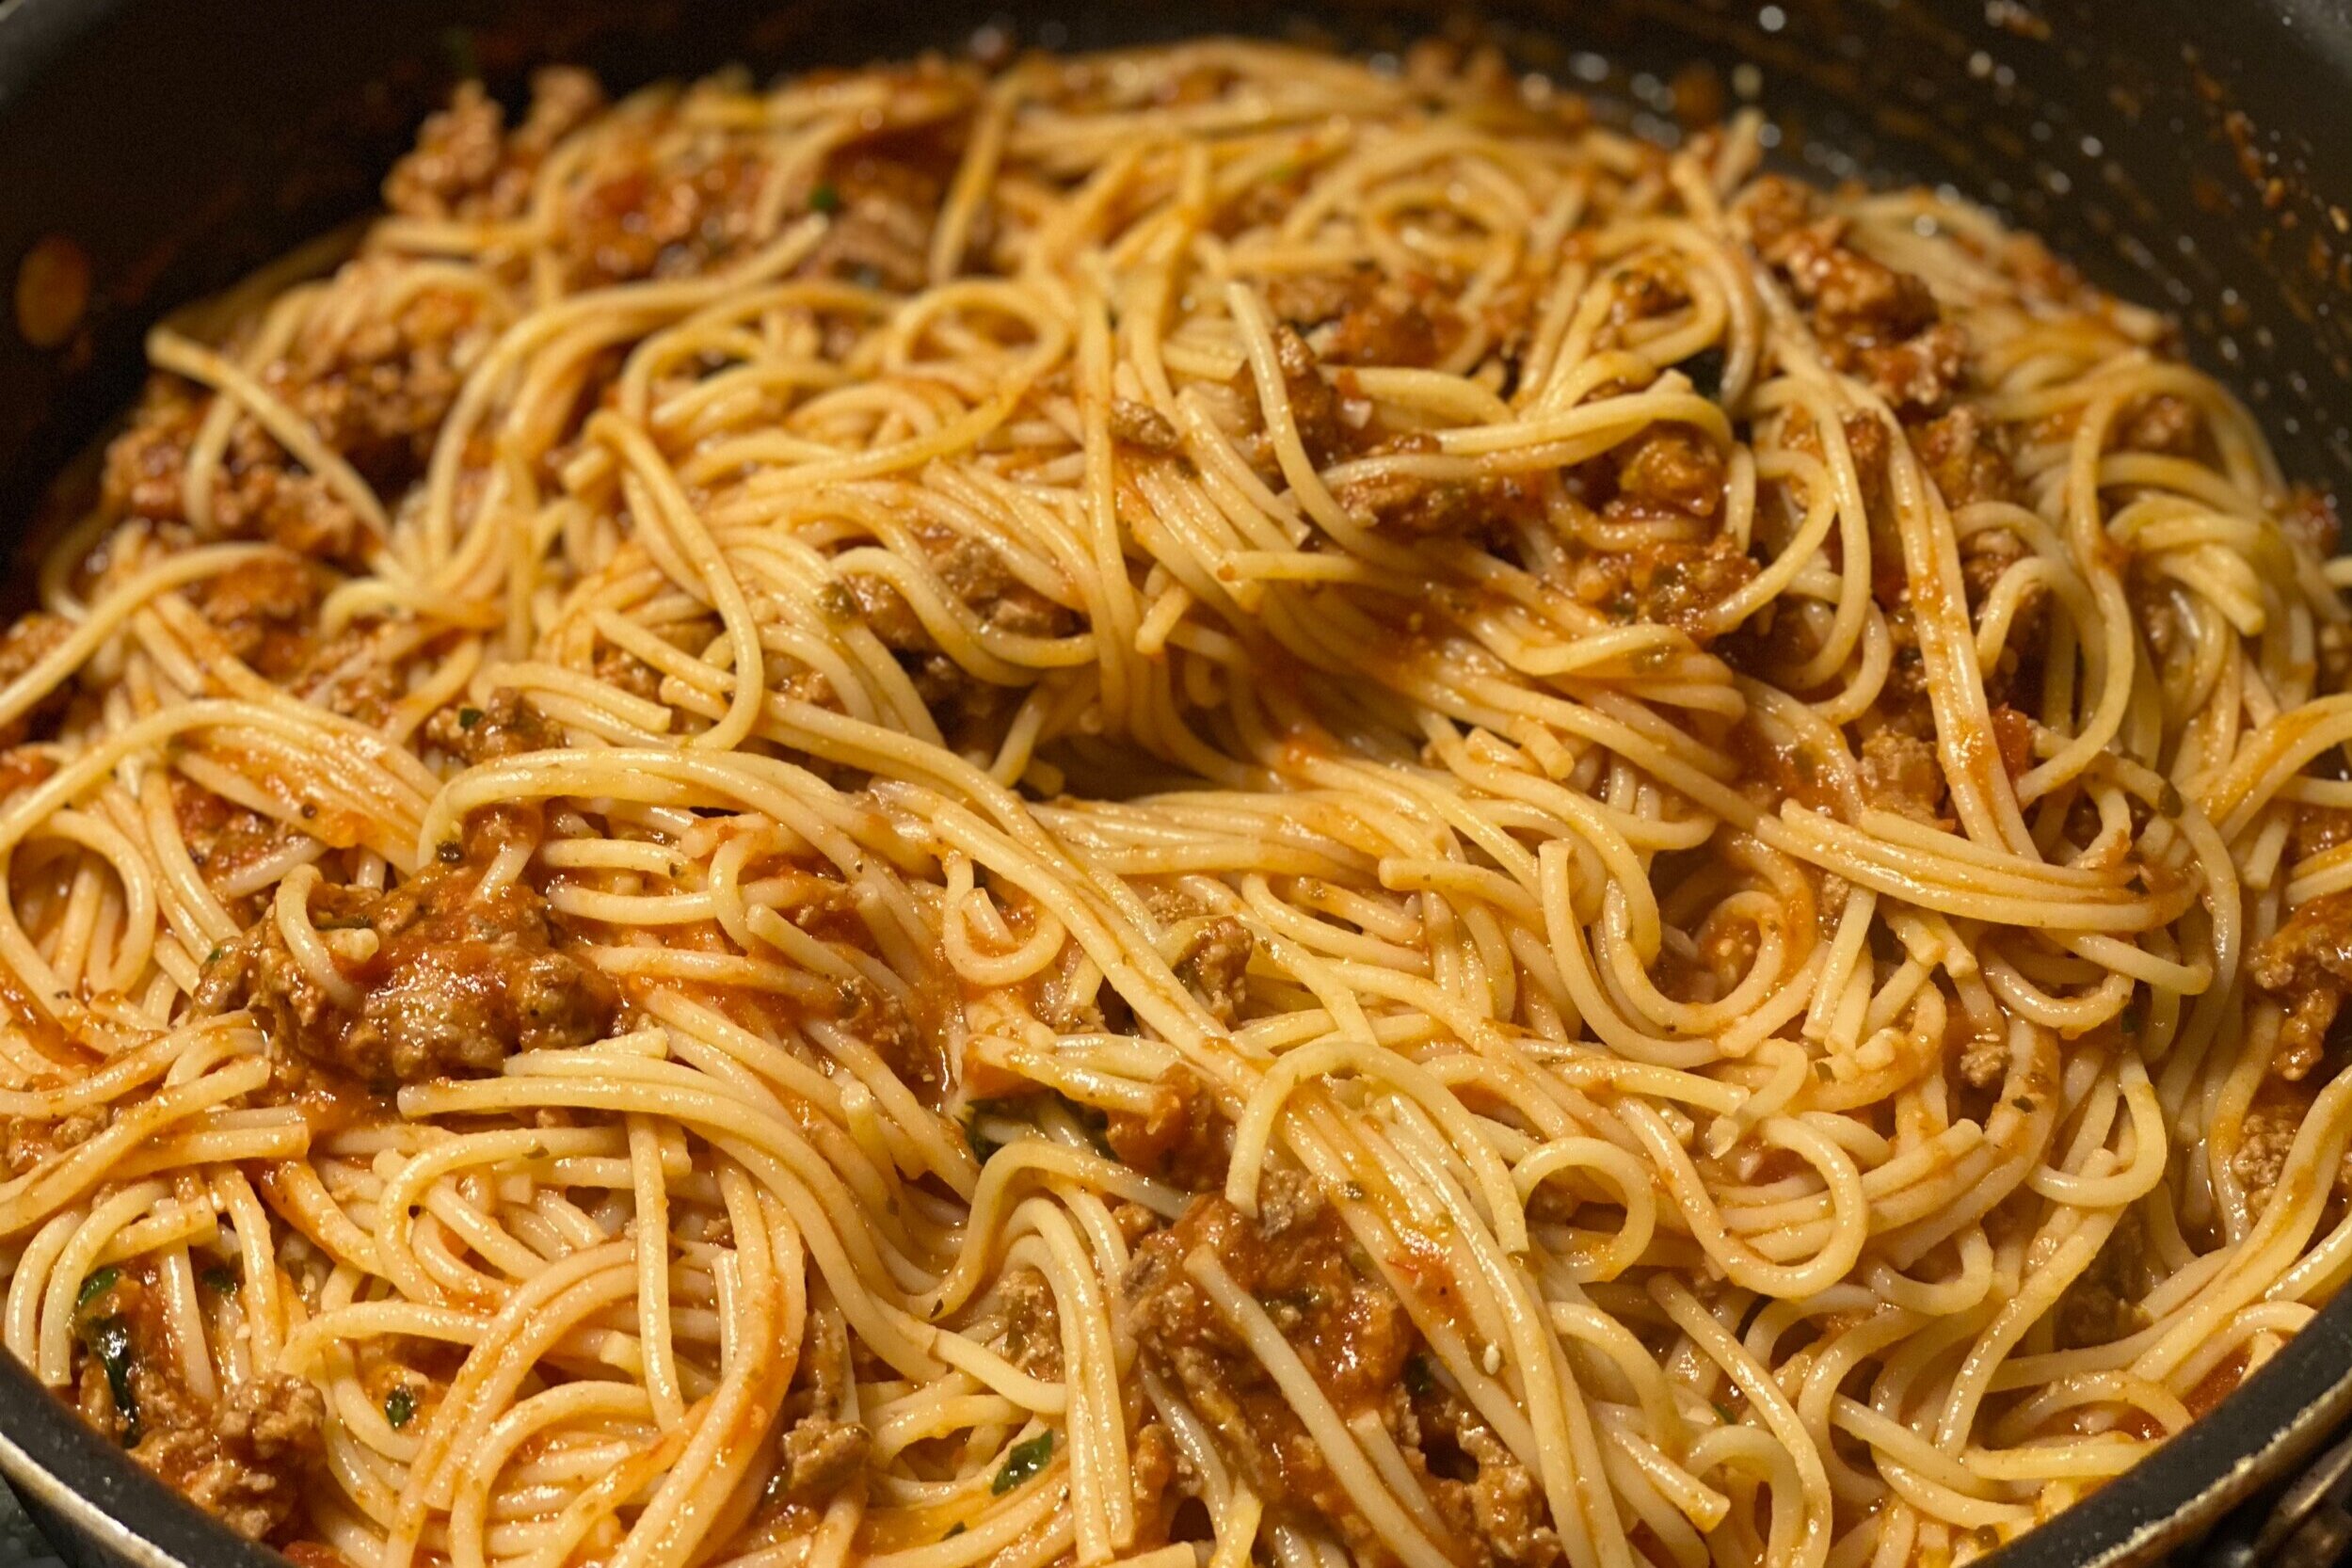  Ground turkey spaghetti  